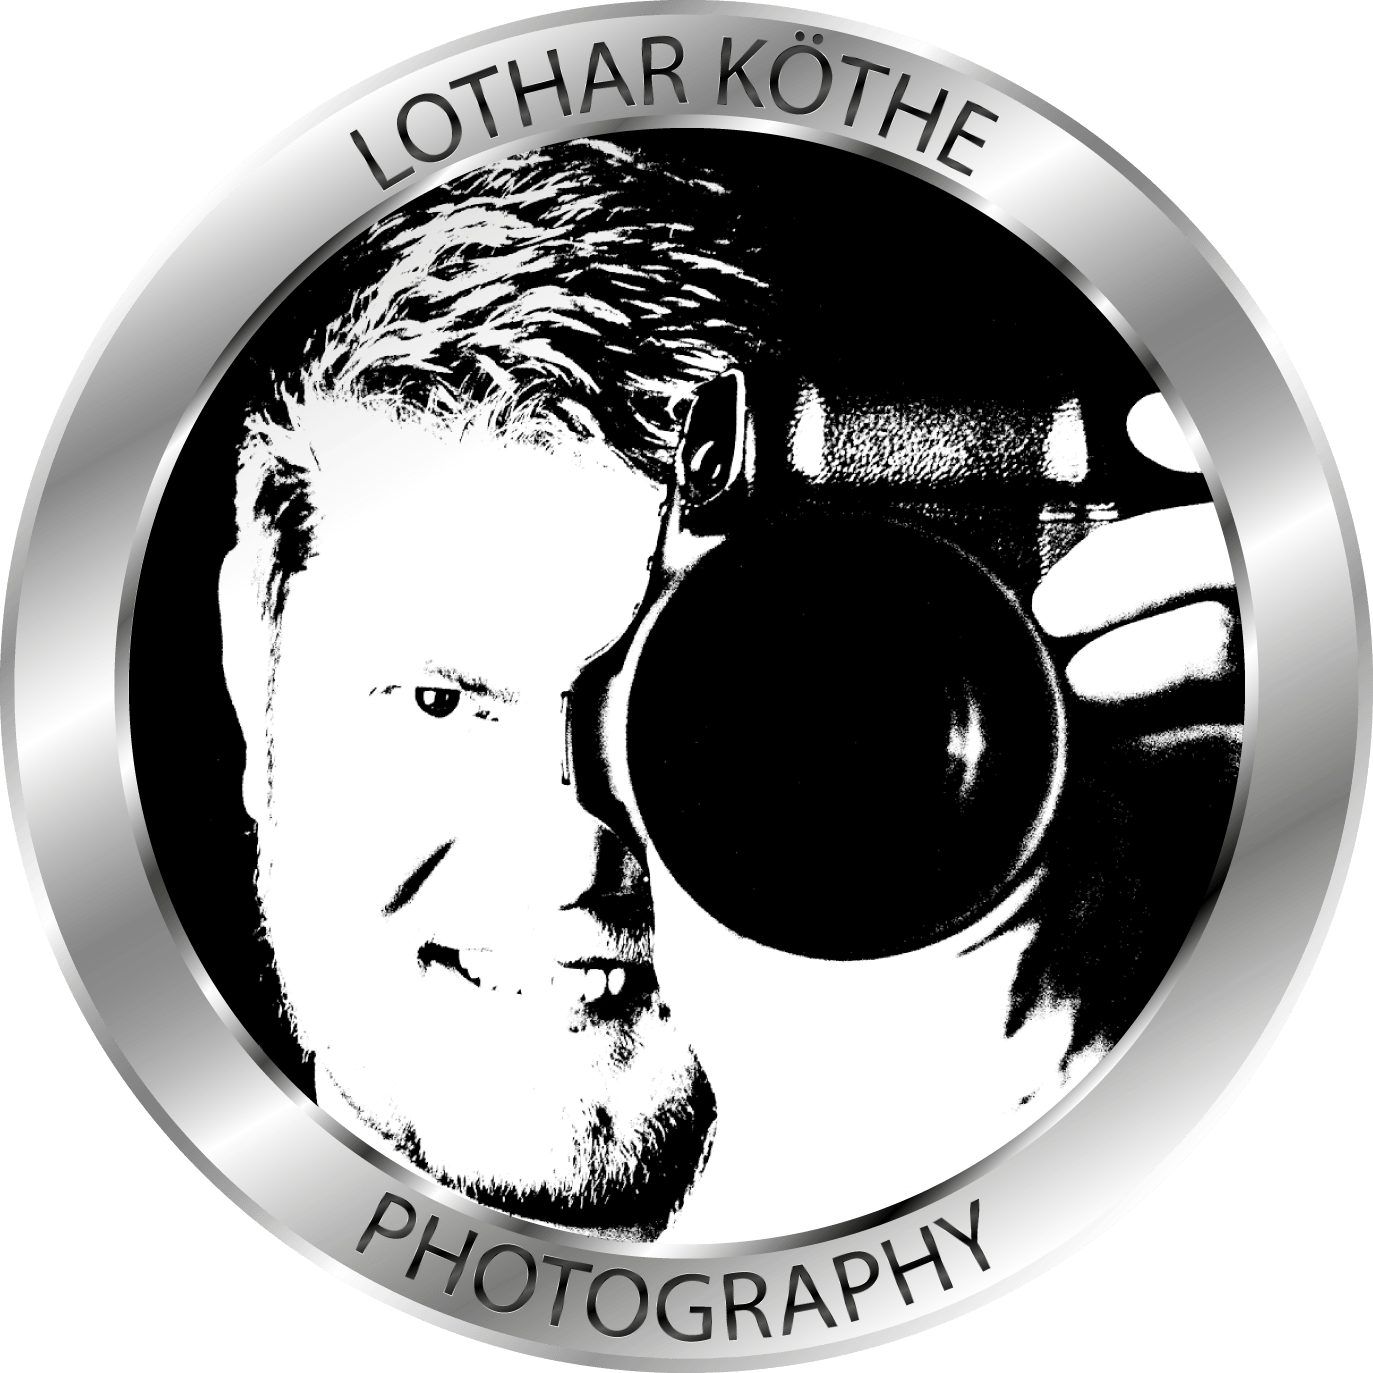 Lothar Köthe Photography